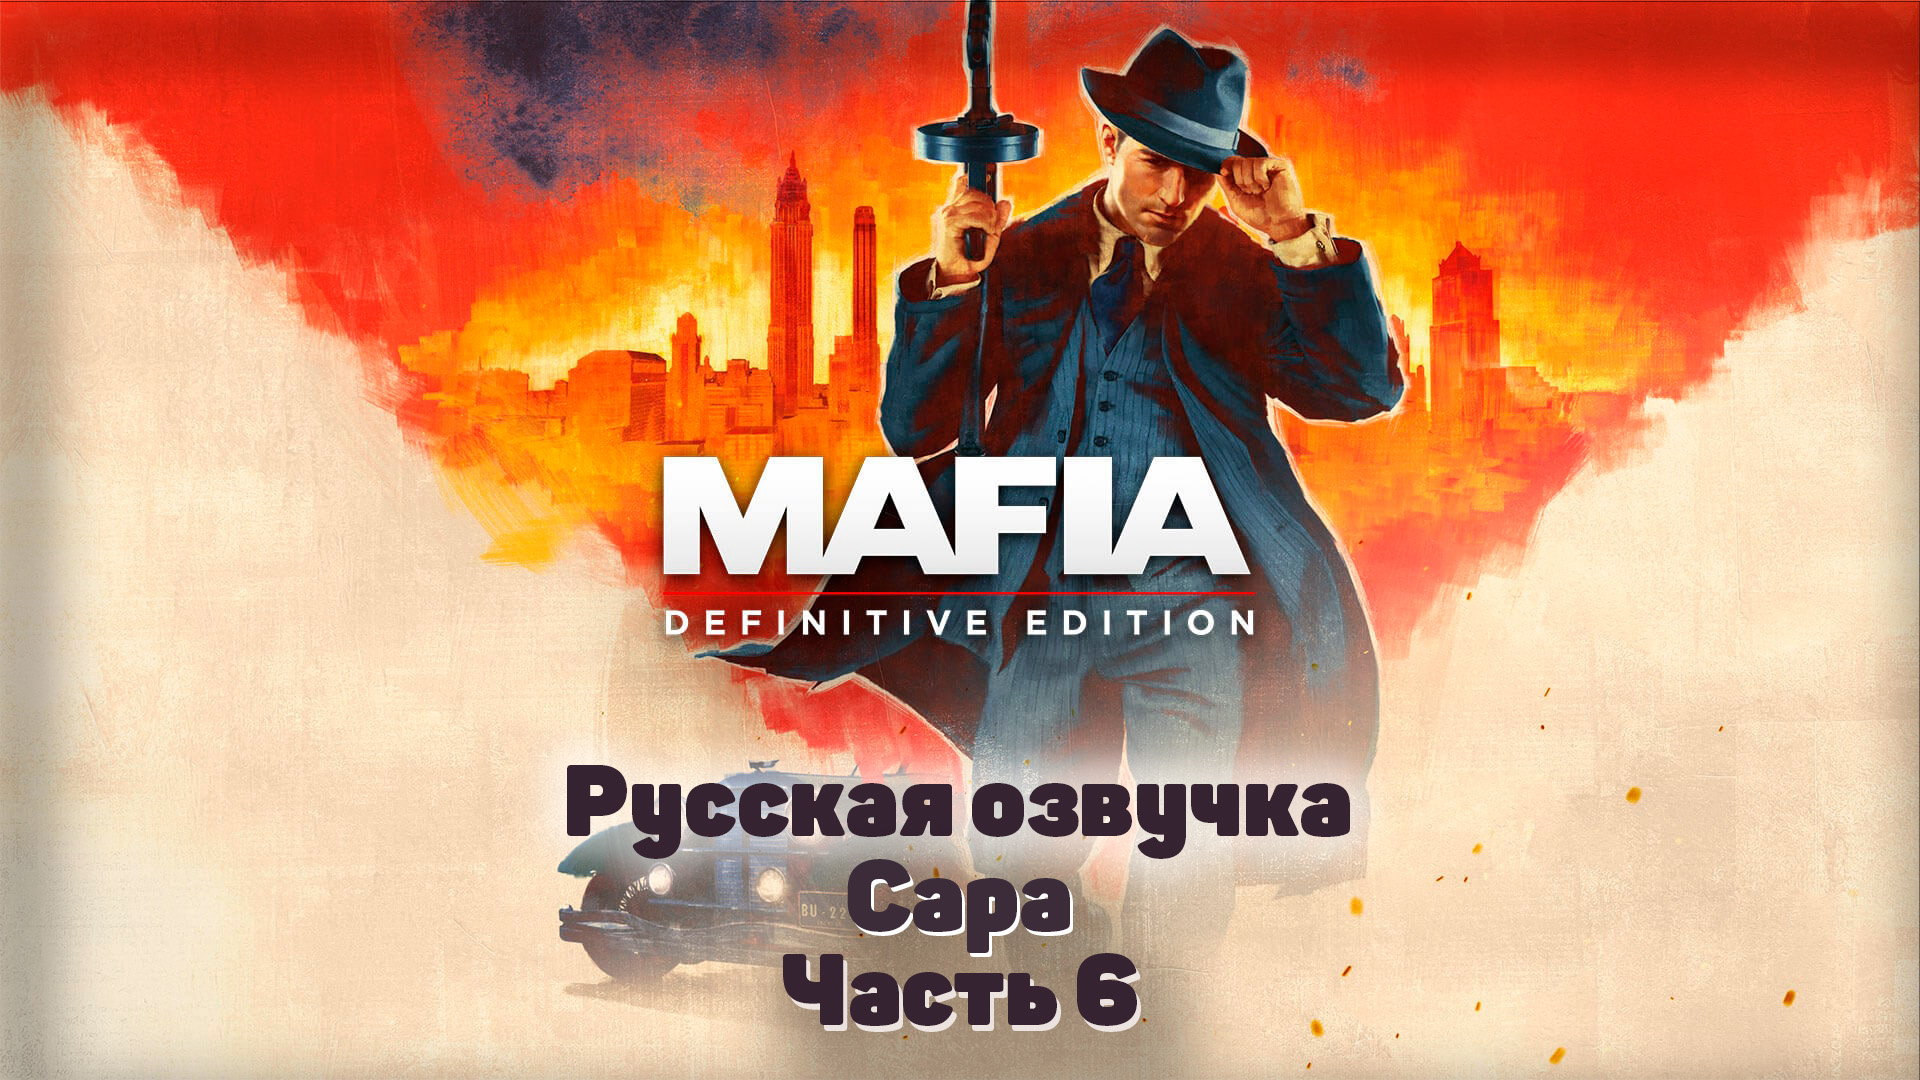 Mafia: Definitive Edition  Часть 6 Сара